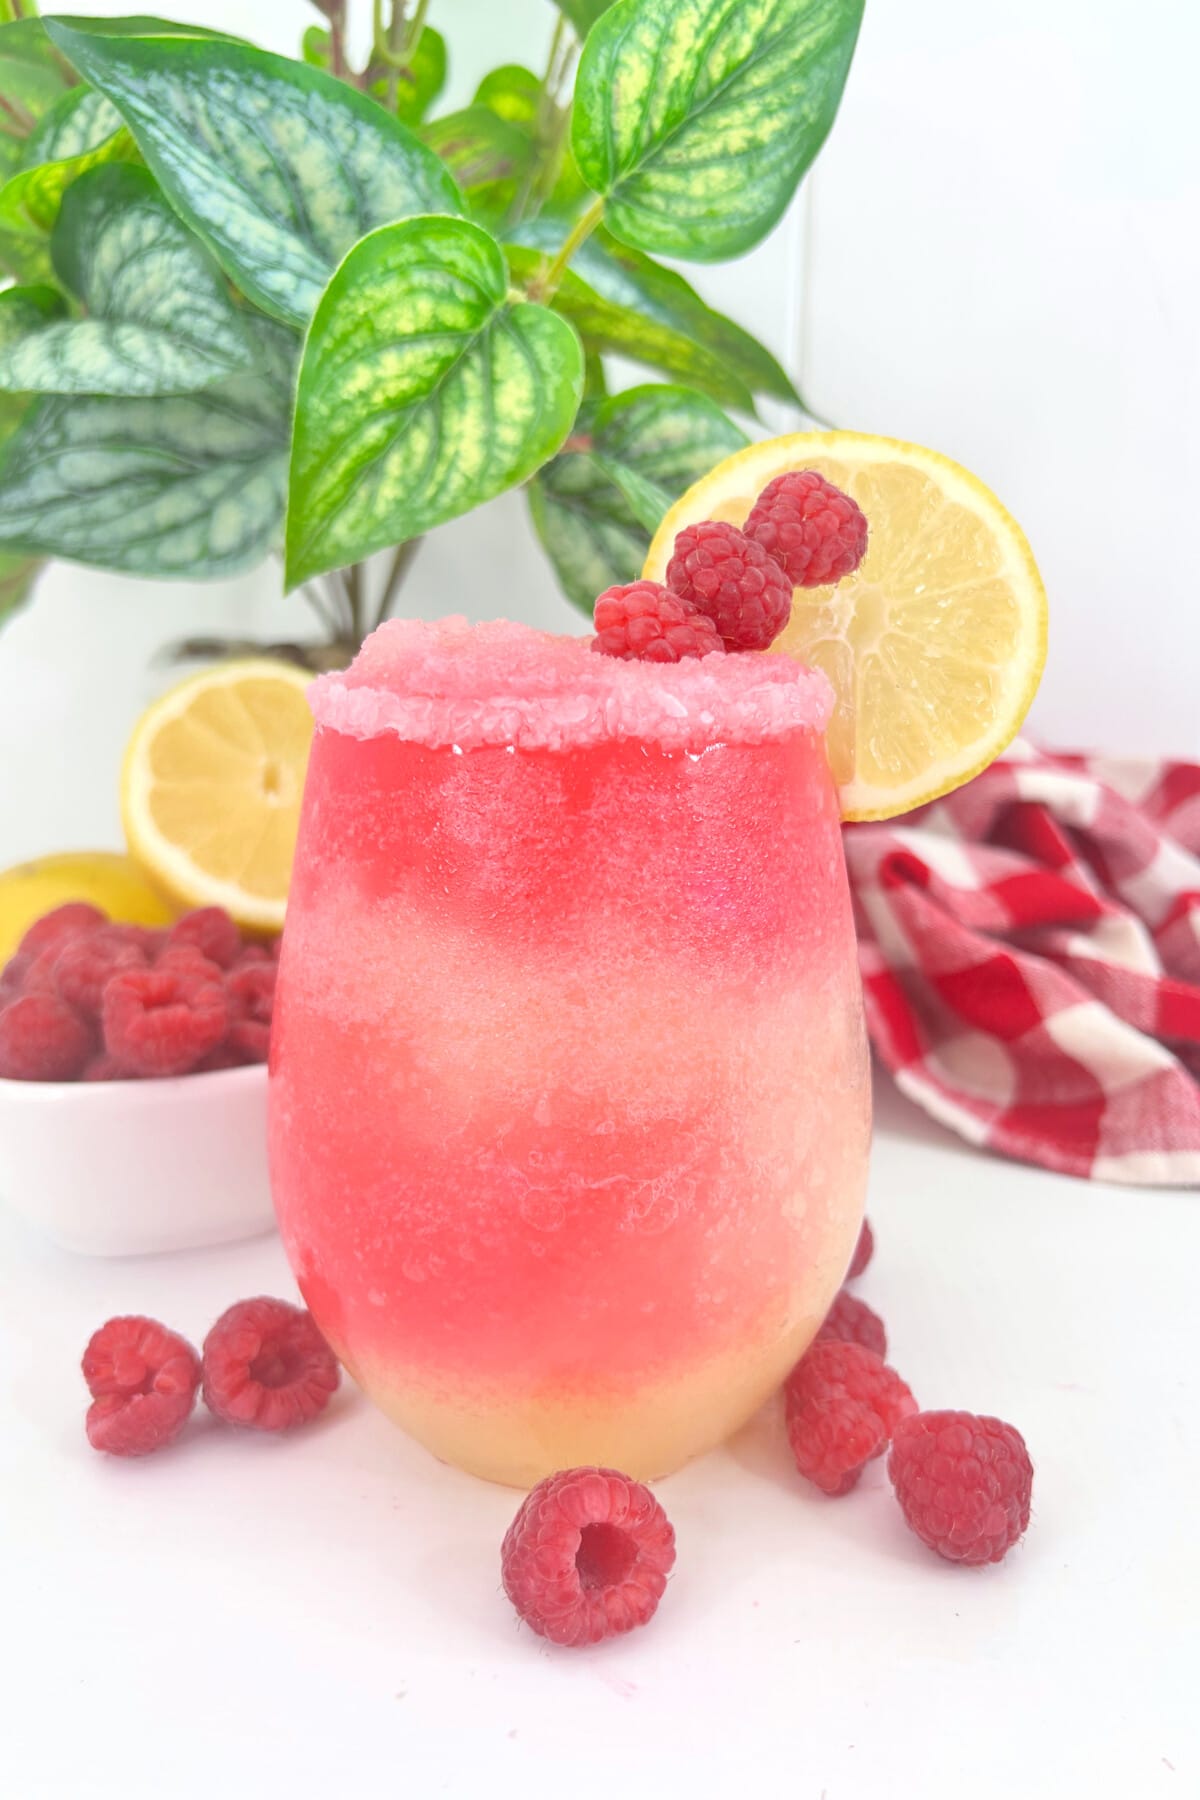 Raspberry Lemonade Cocktail with fresh raspberries on the table.